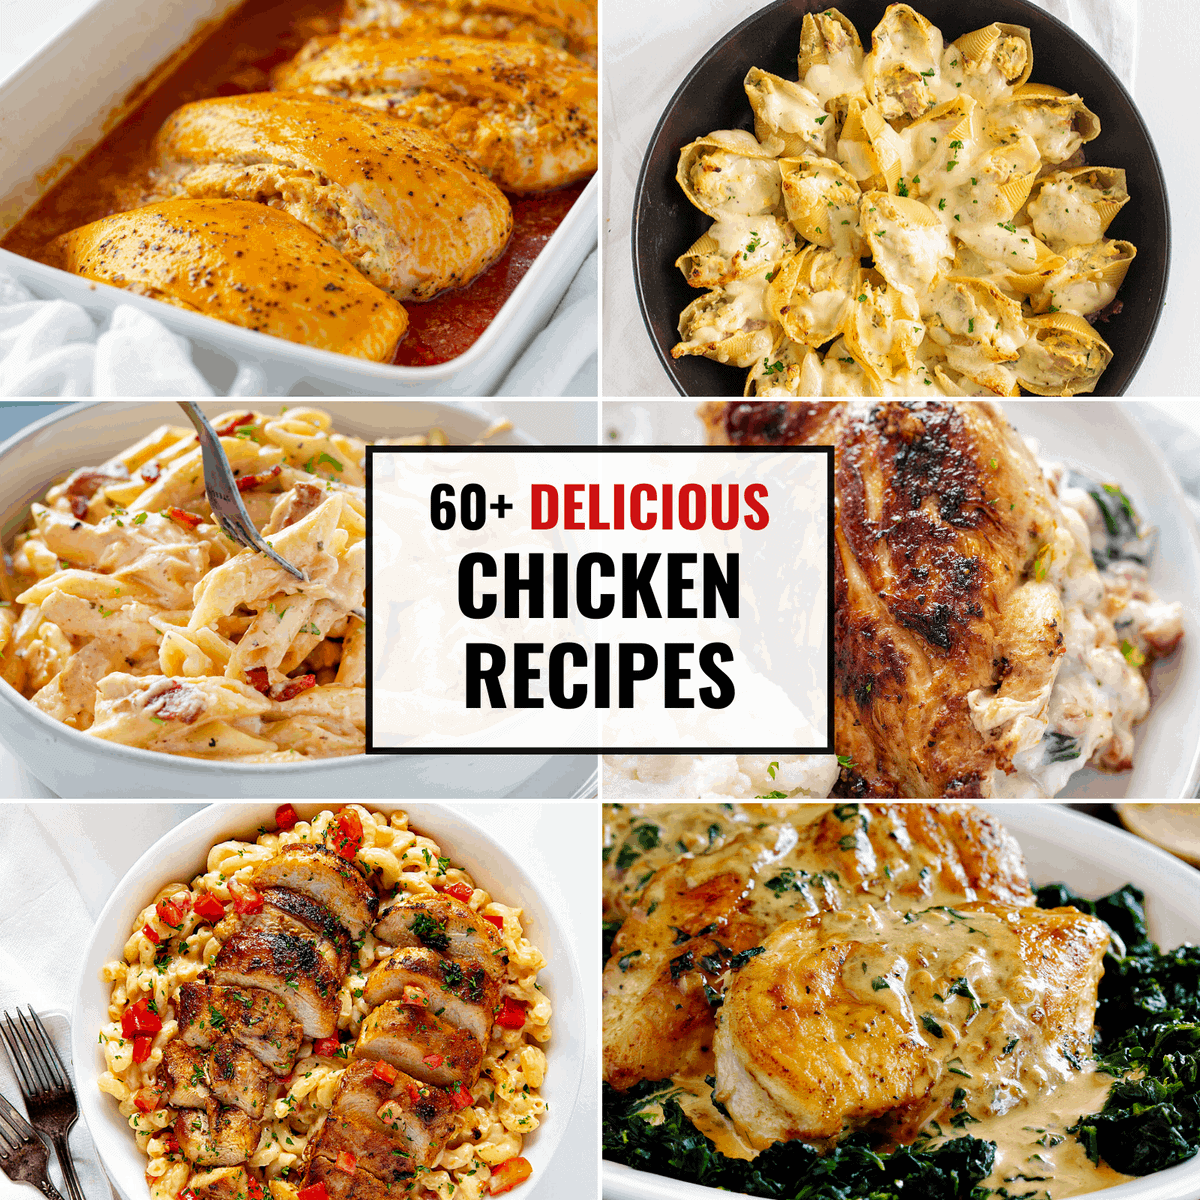 Over 60 delicious chicken recipes